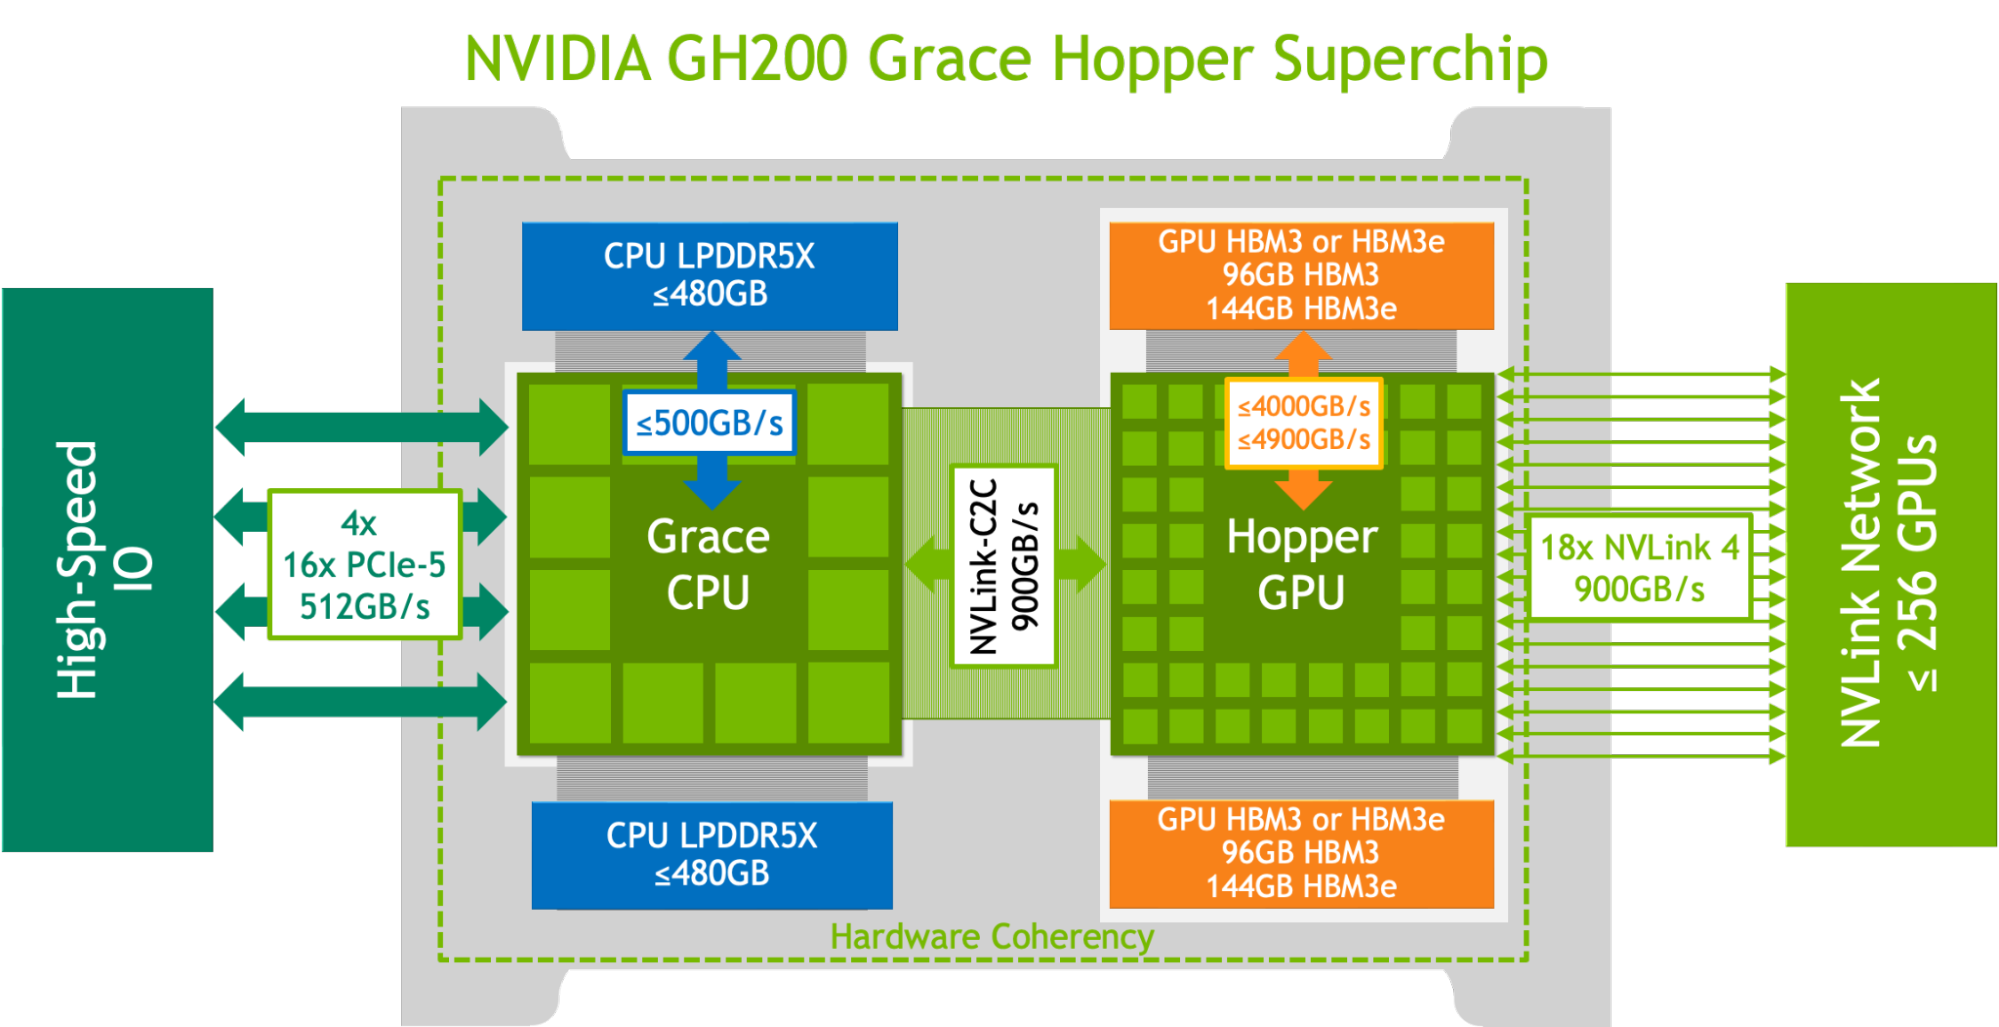 gh200 grace hopper superchip logical